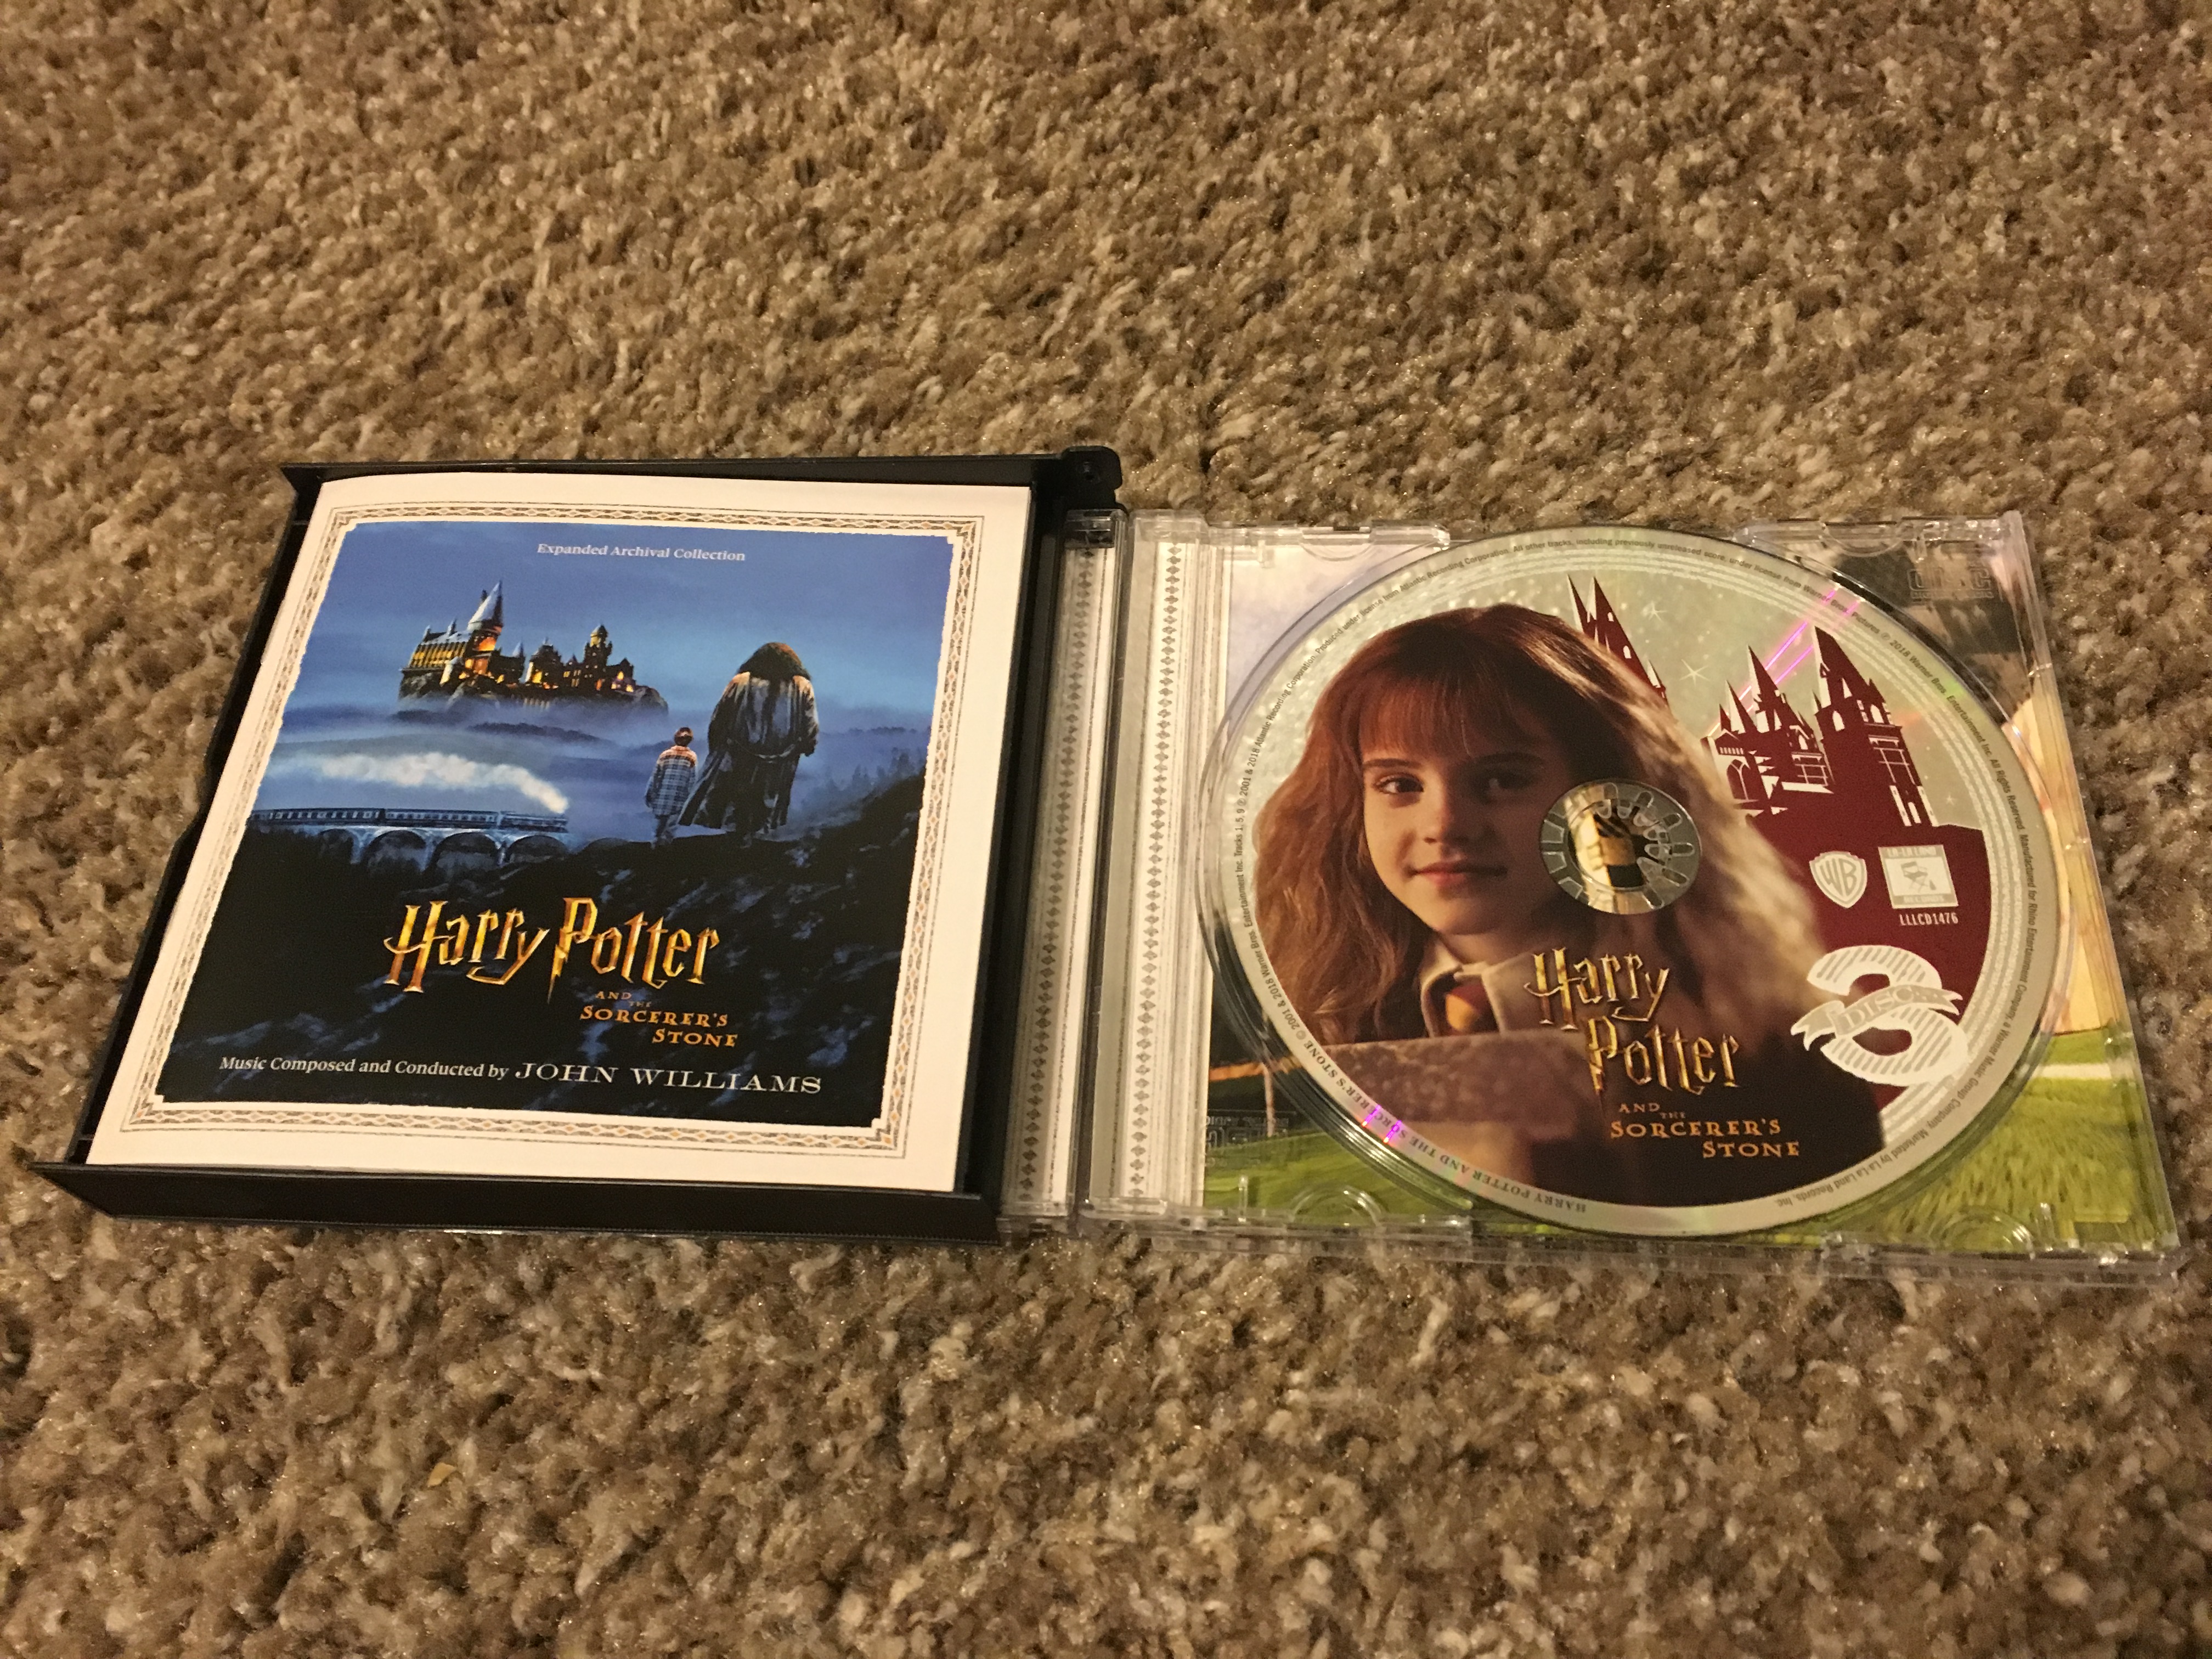 “Harry Potter: The John Williams Soundtrack Collection”, Disc 3, “Sorcerer’s Stone” score